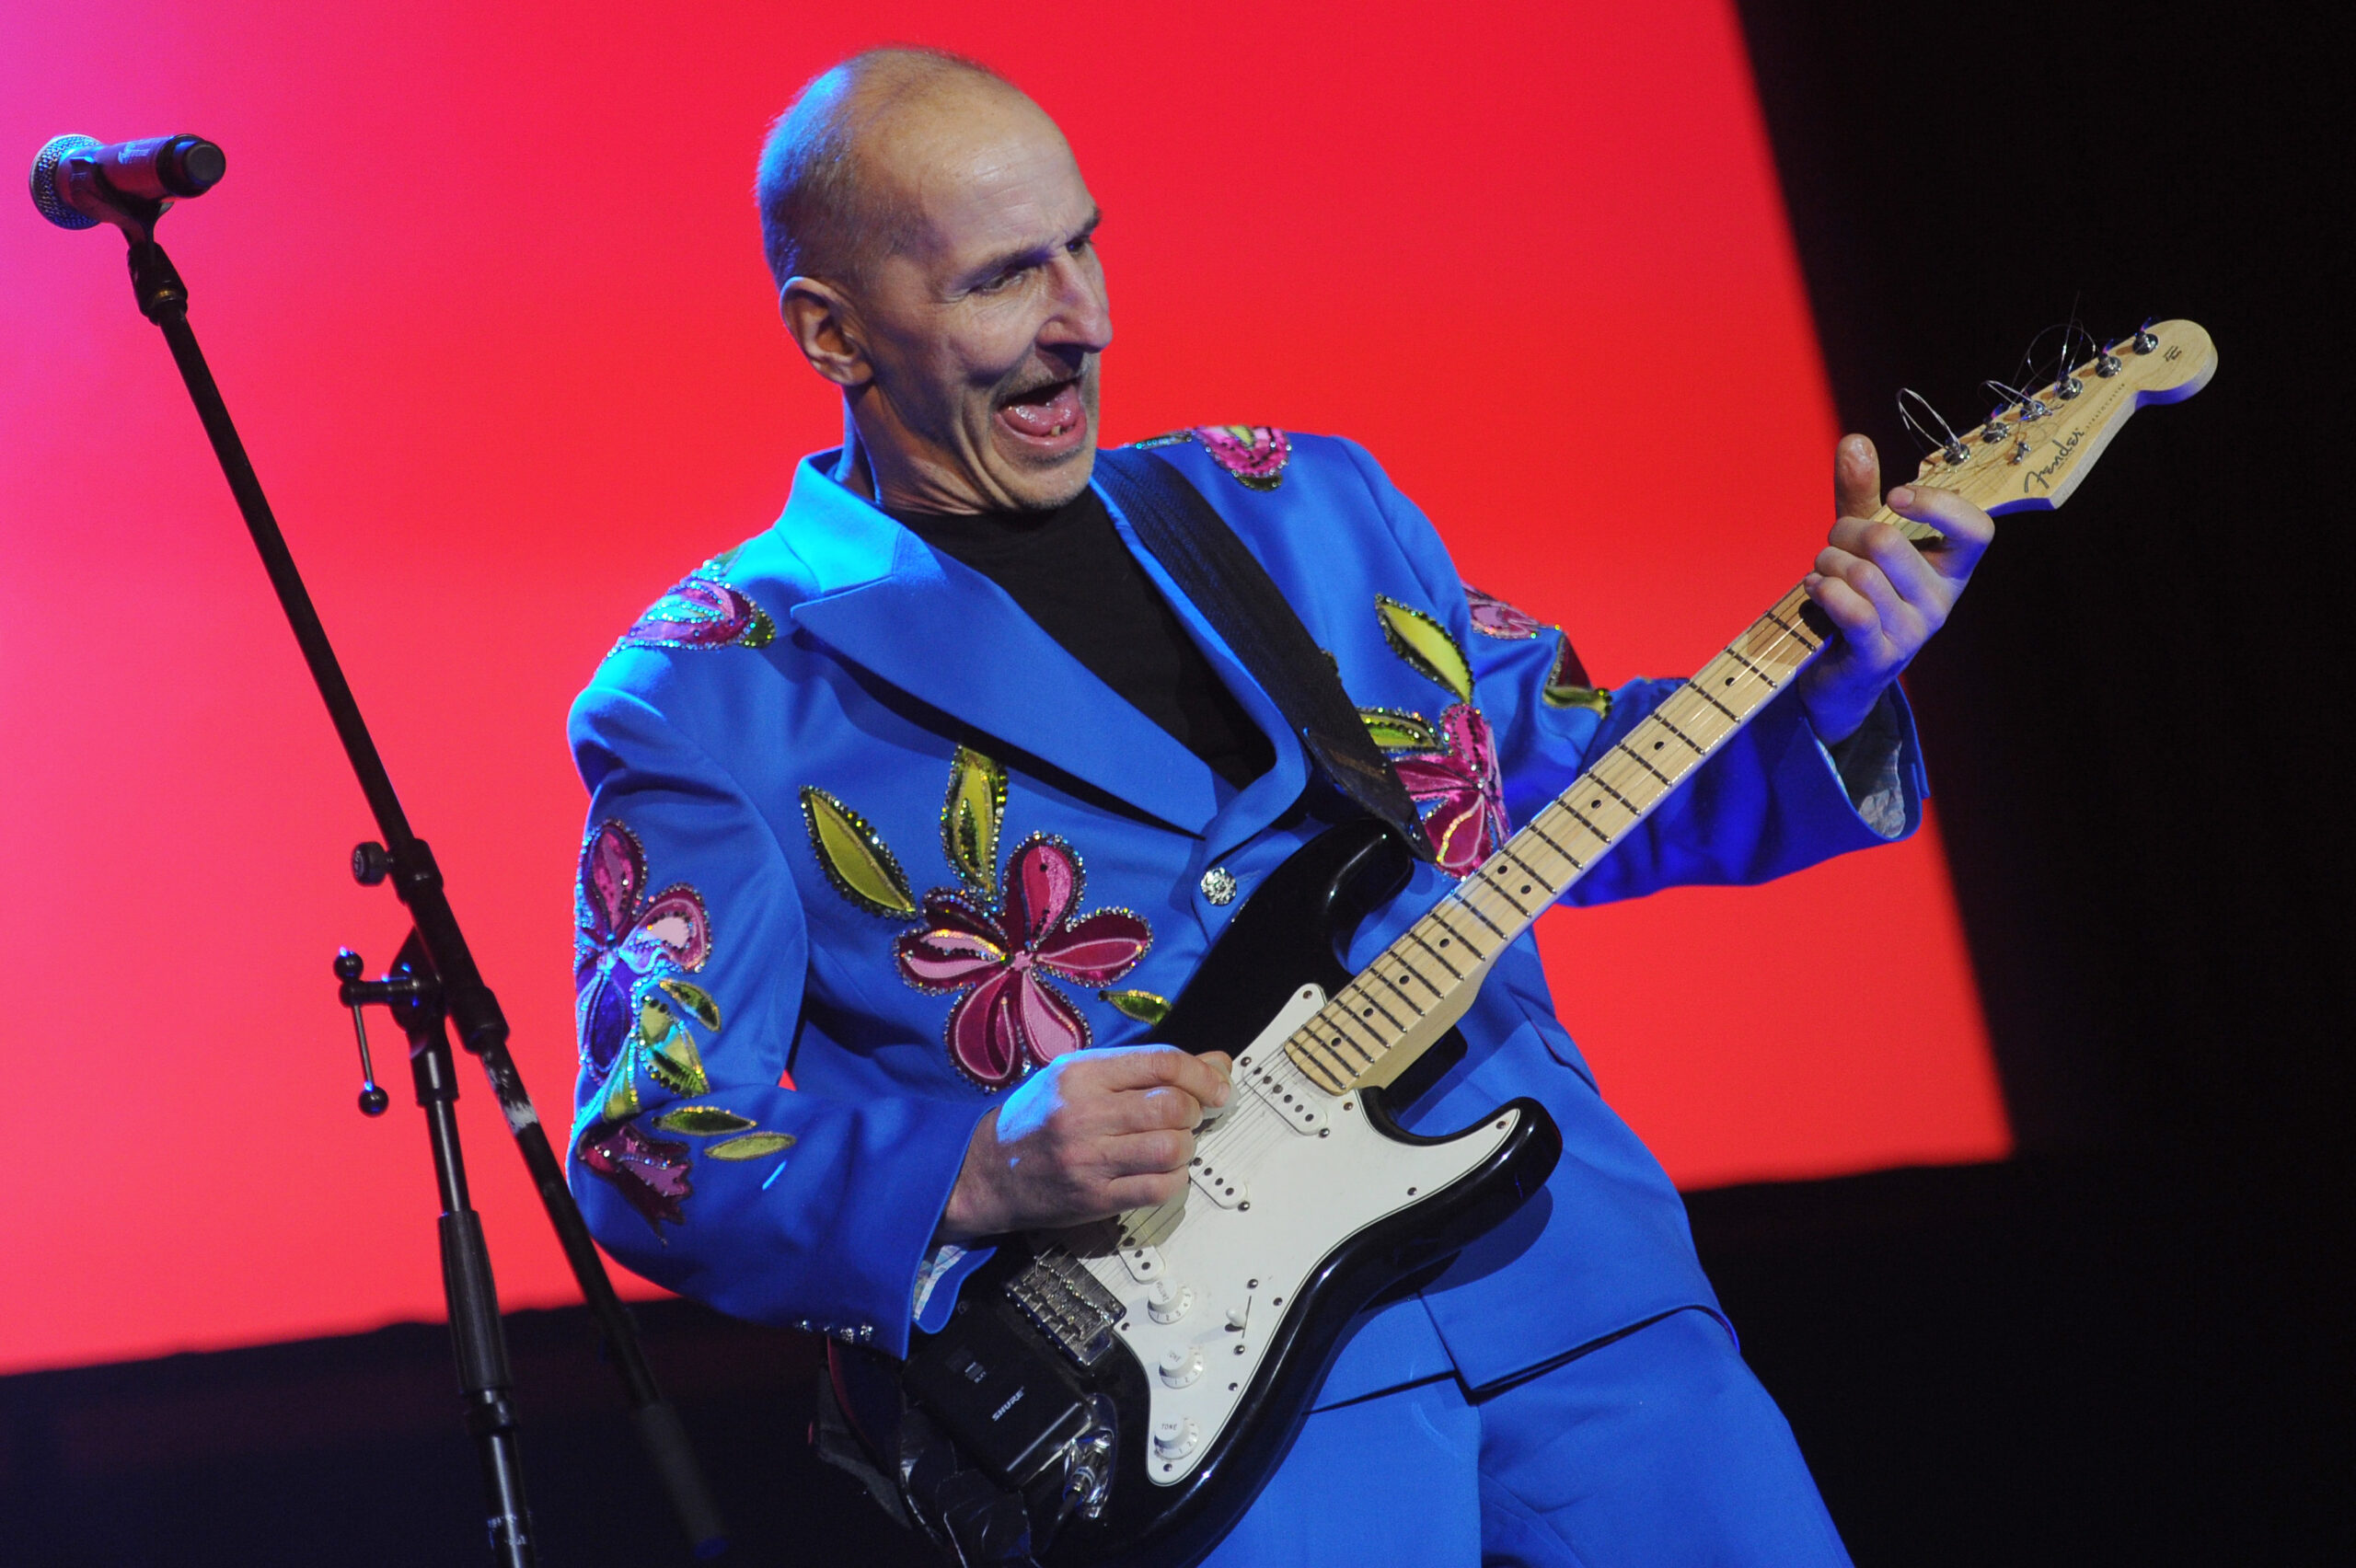 Петр Мамонов на сцене в 2012 году. Фото ITAR-TASS / Sergei Karpov/Scanpix/Leta